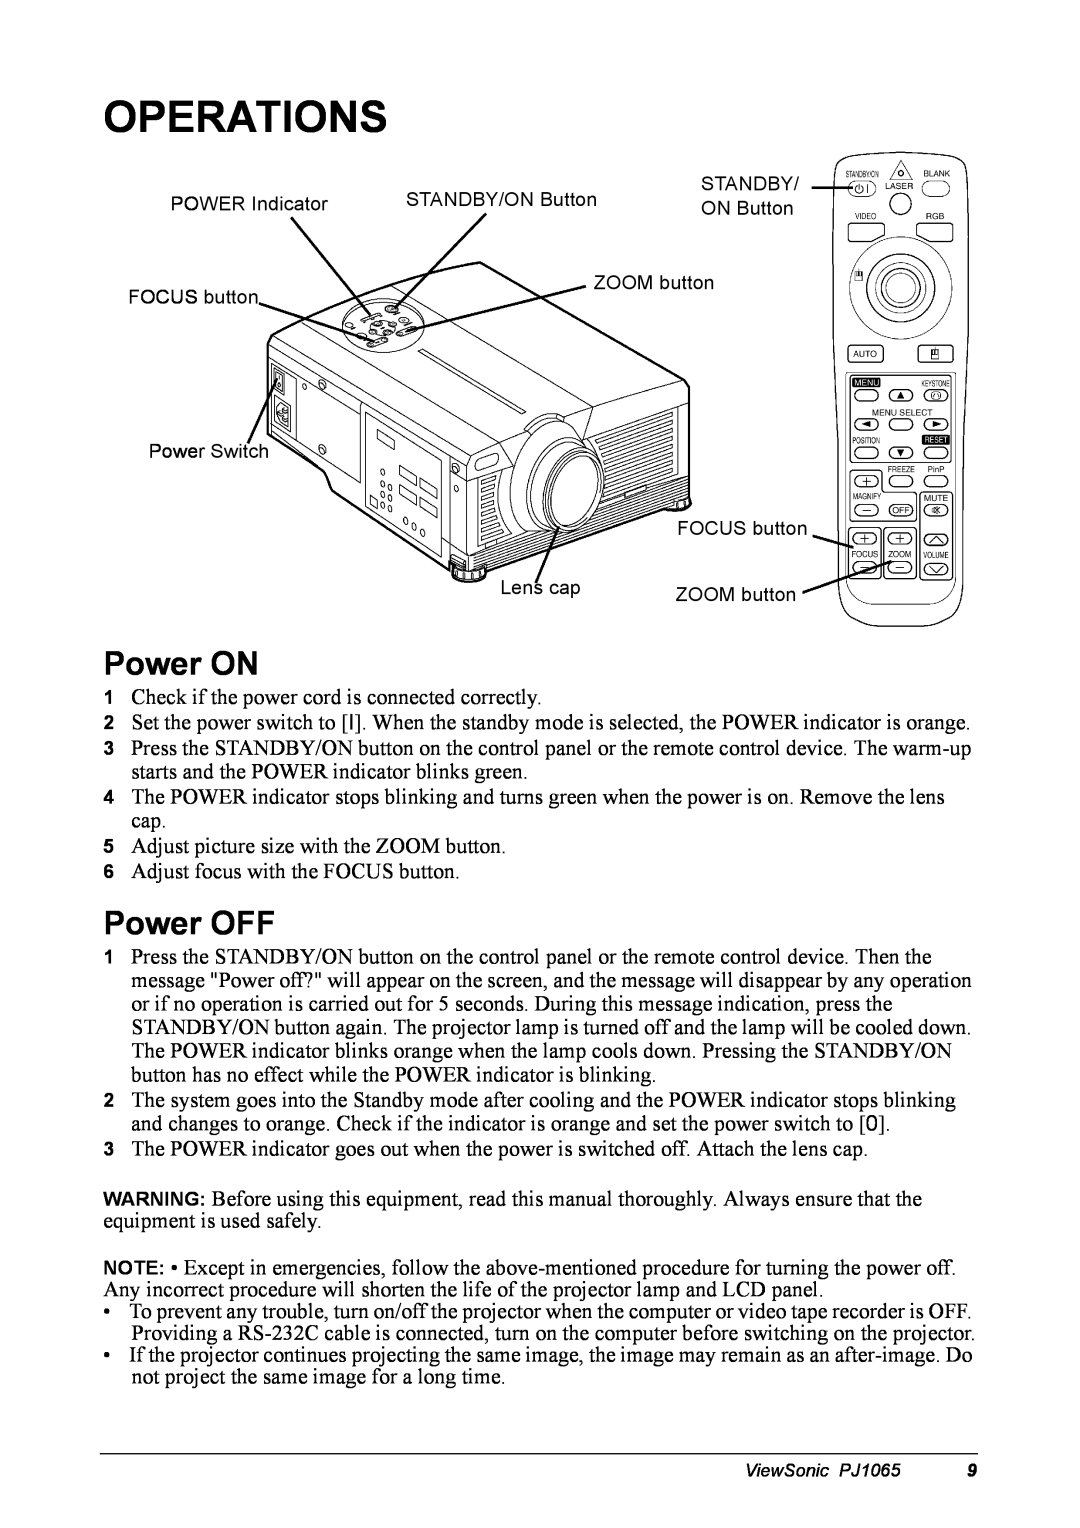 ViewSonic PJ1065 manual Operations, Power ON, Power OFF 